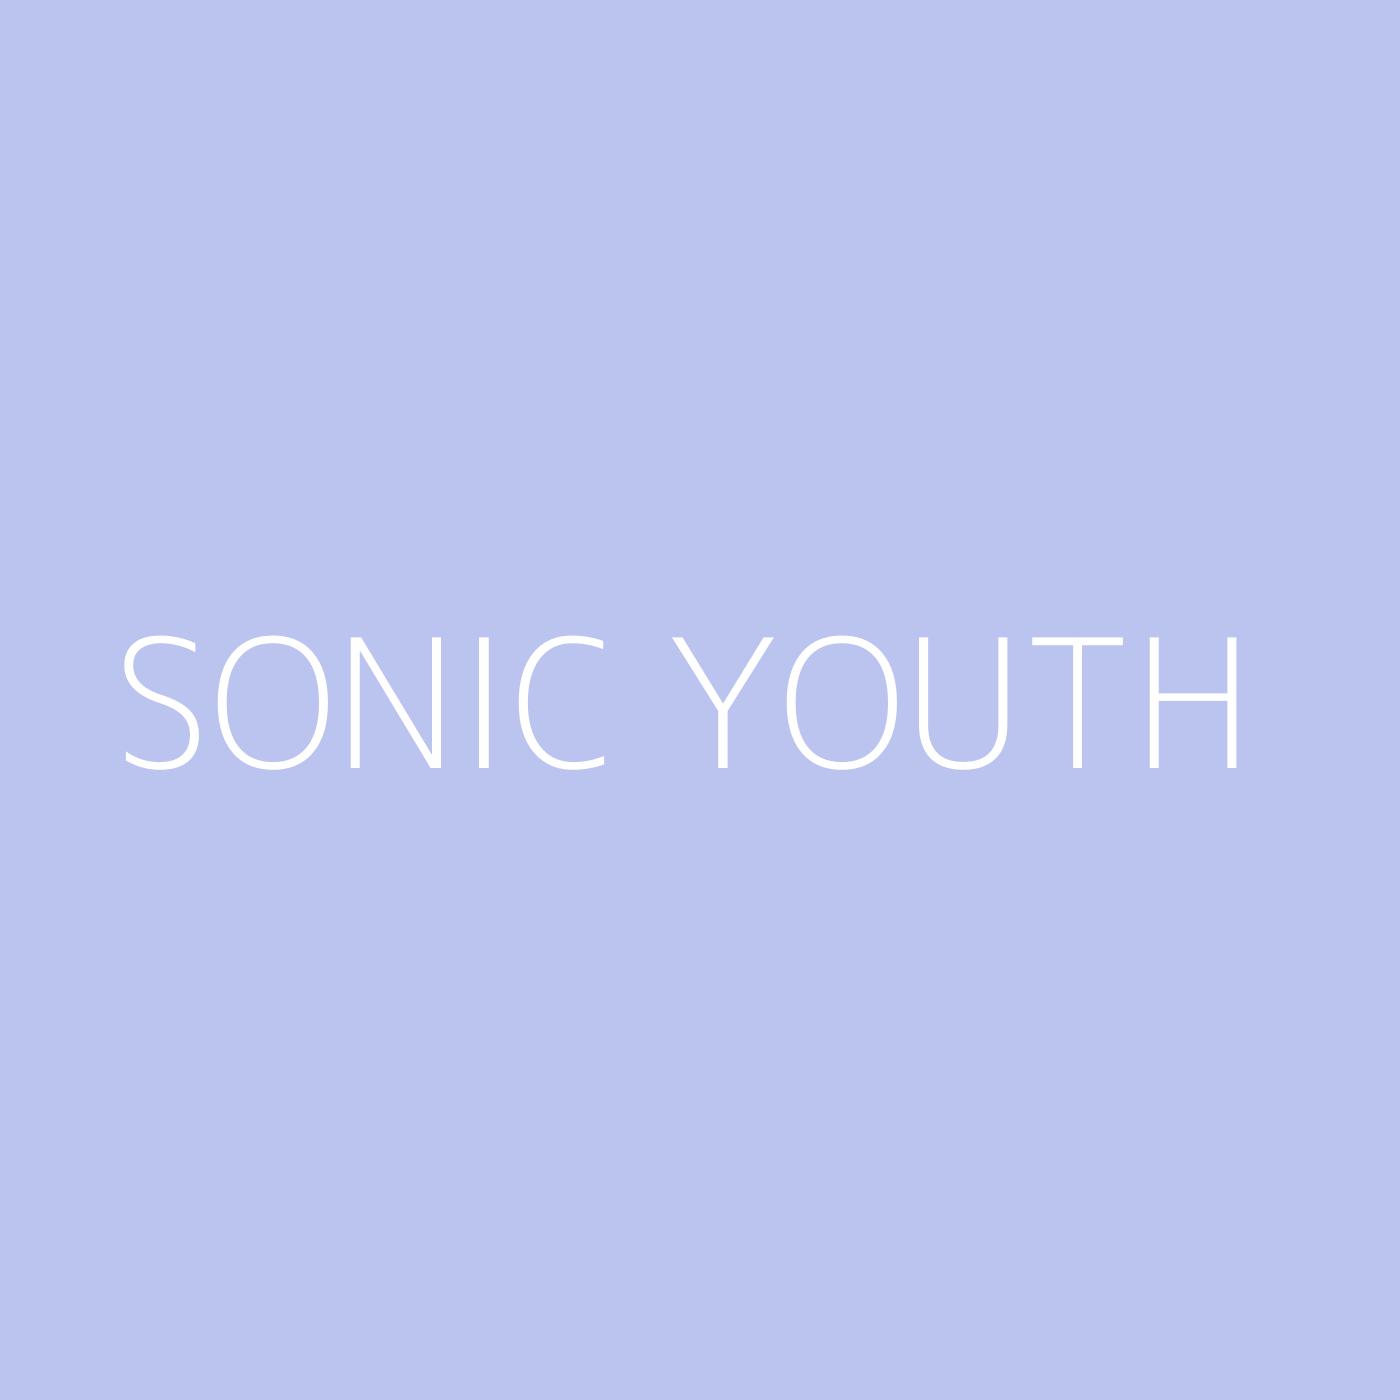 Sonic Youth Playlist Artwork